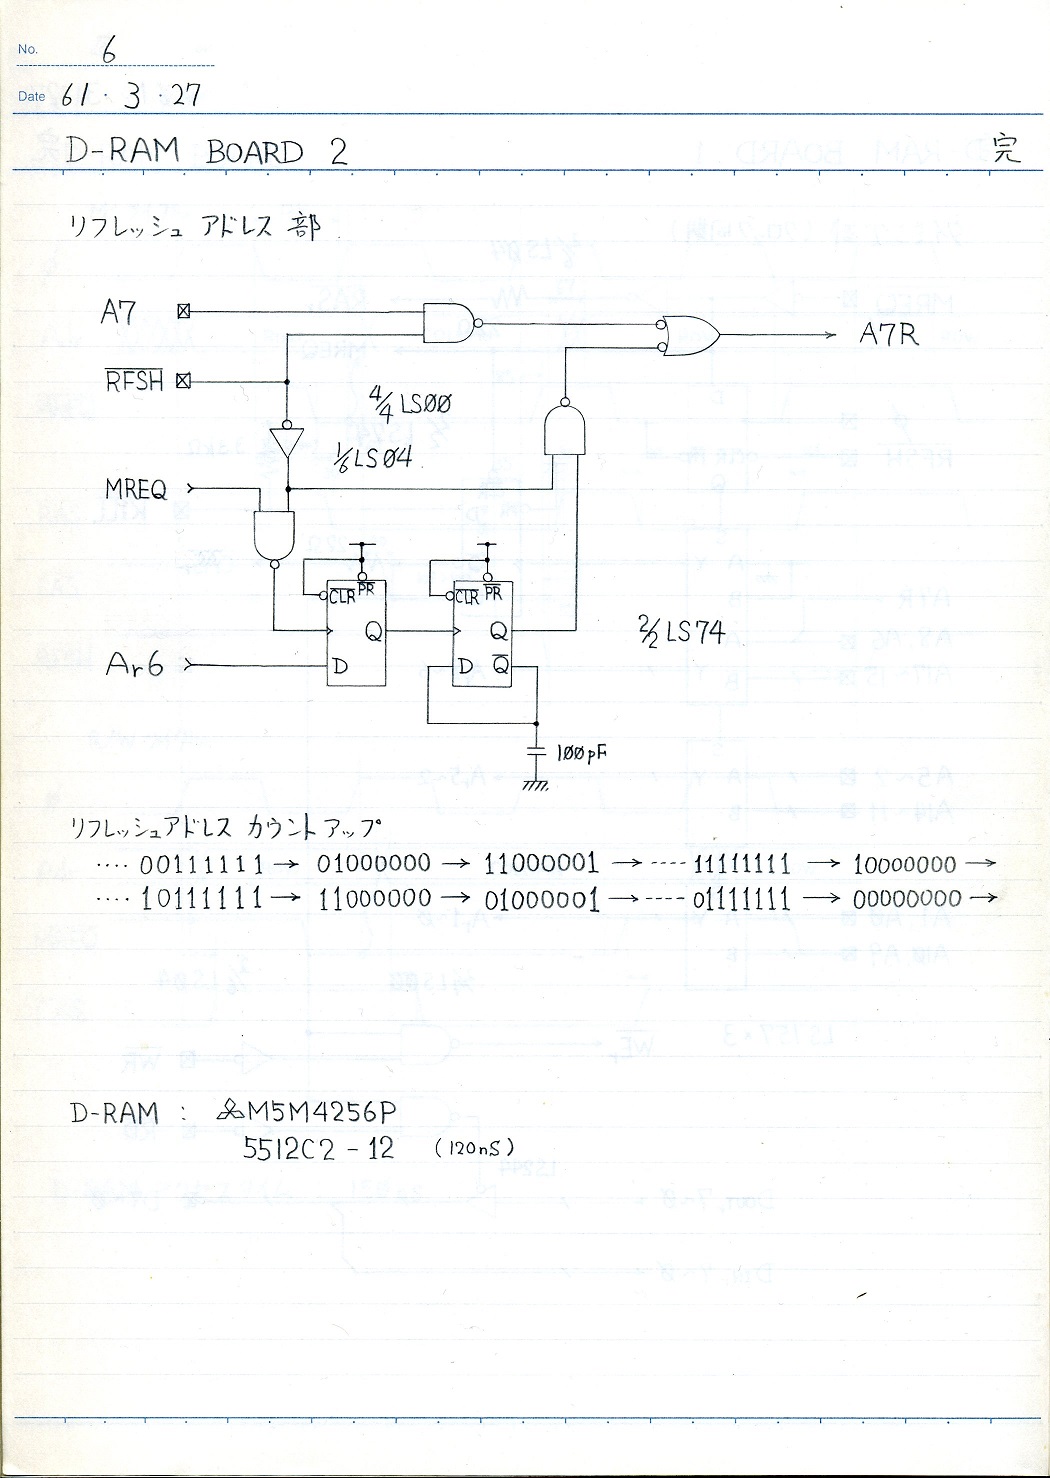 D-RAM board circuit 2